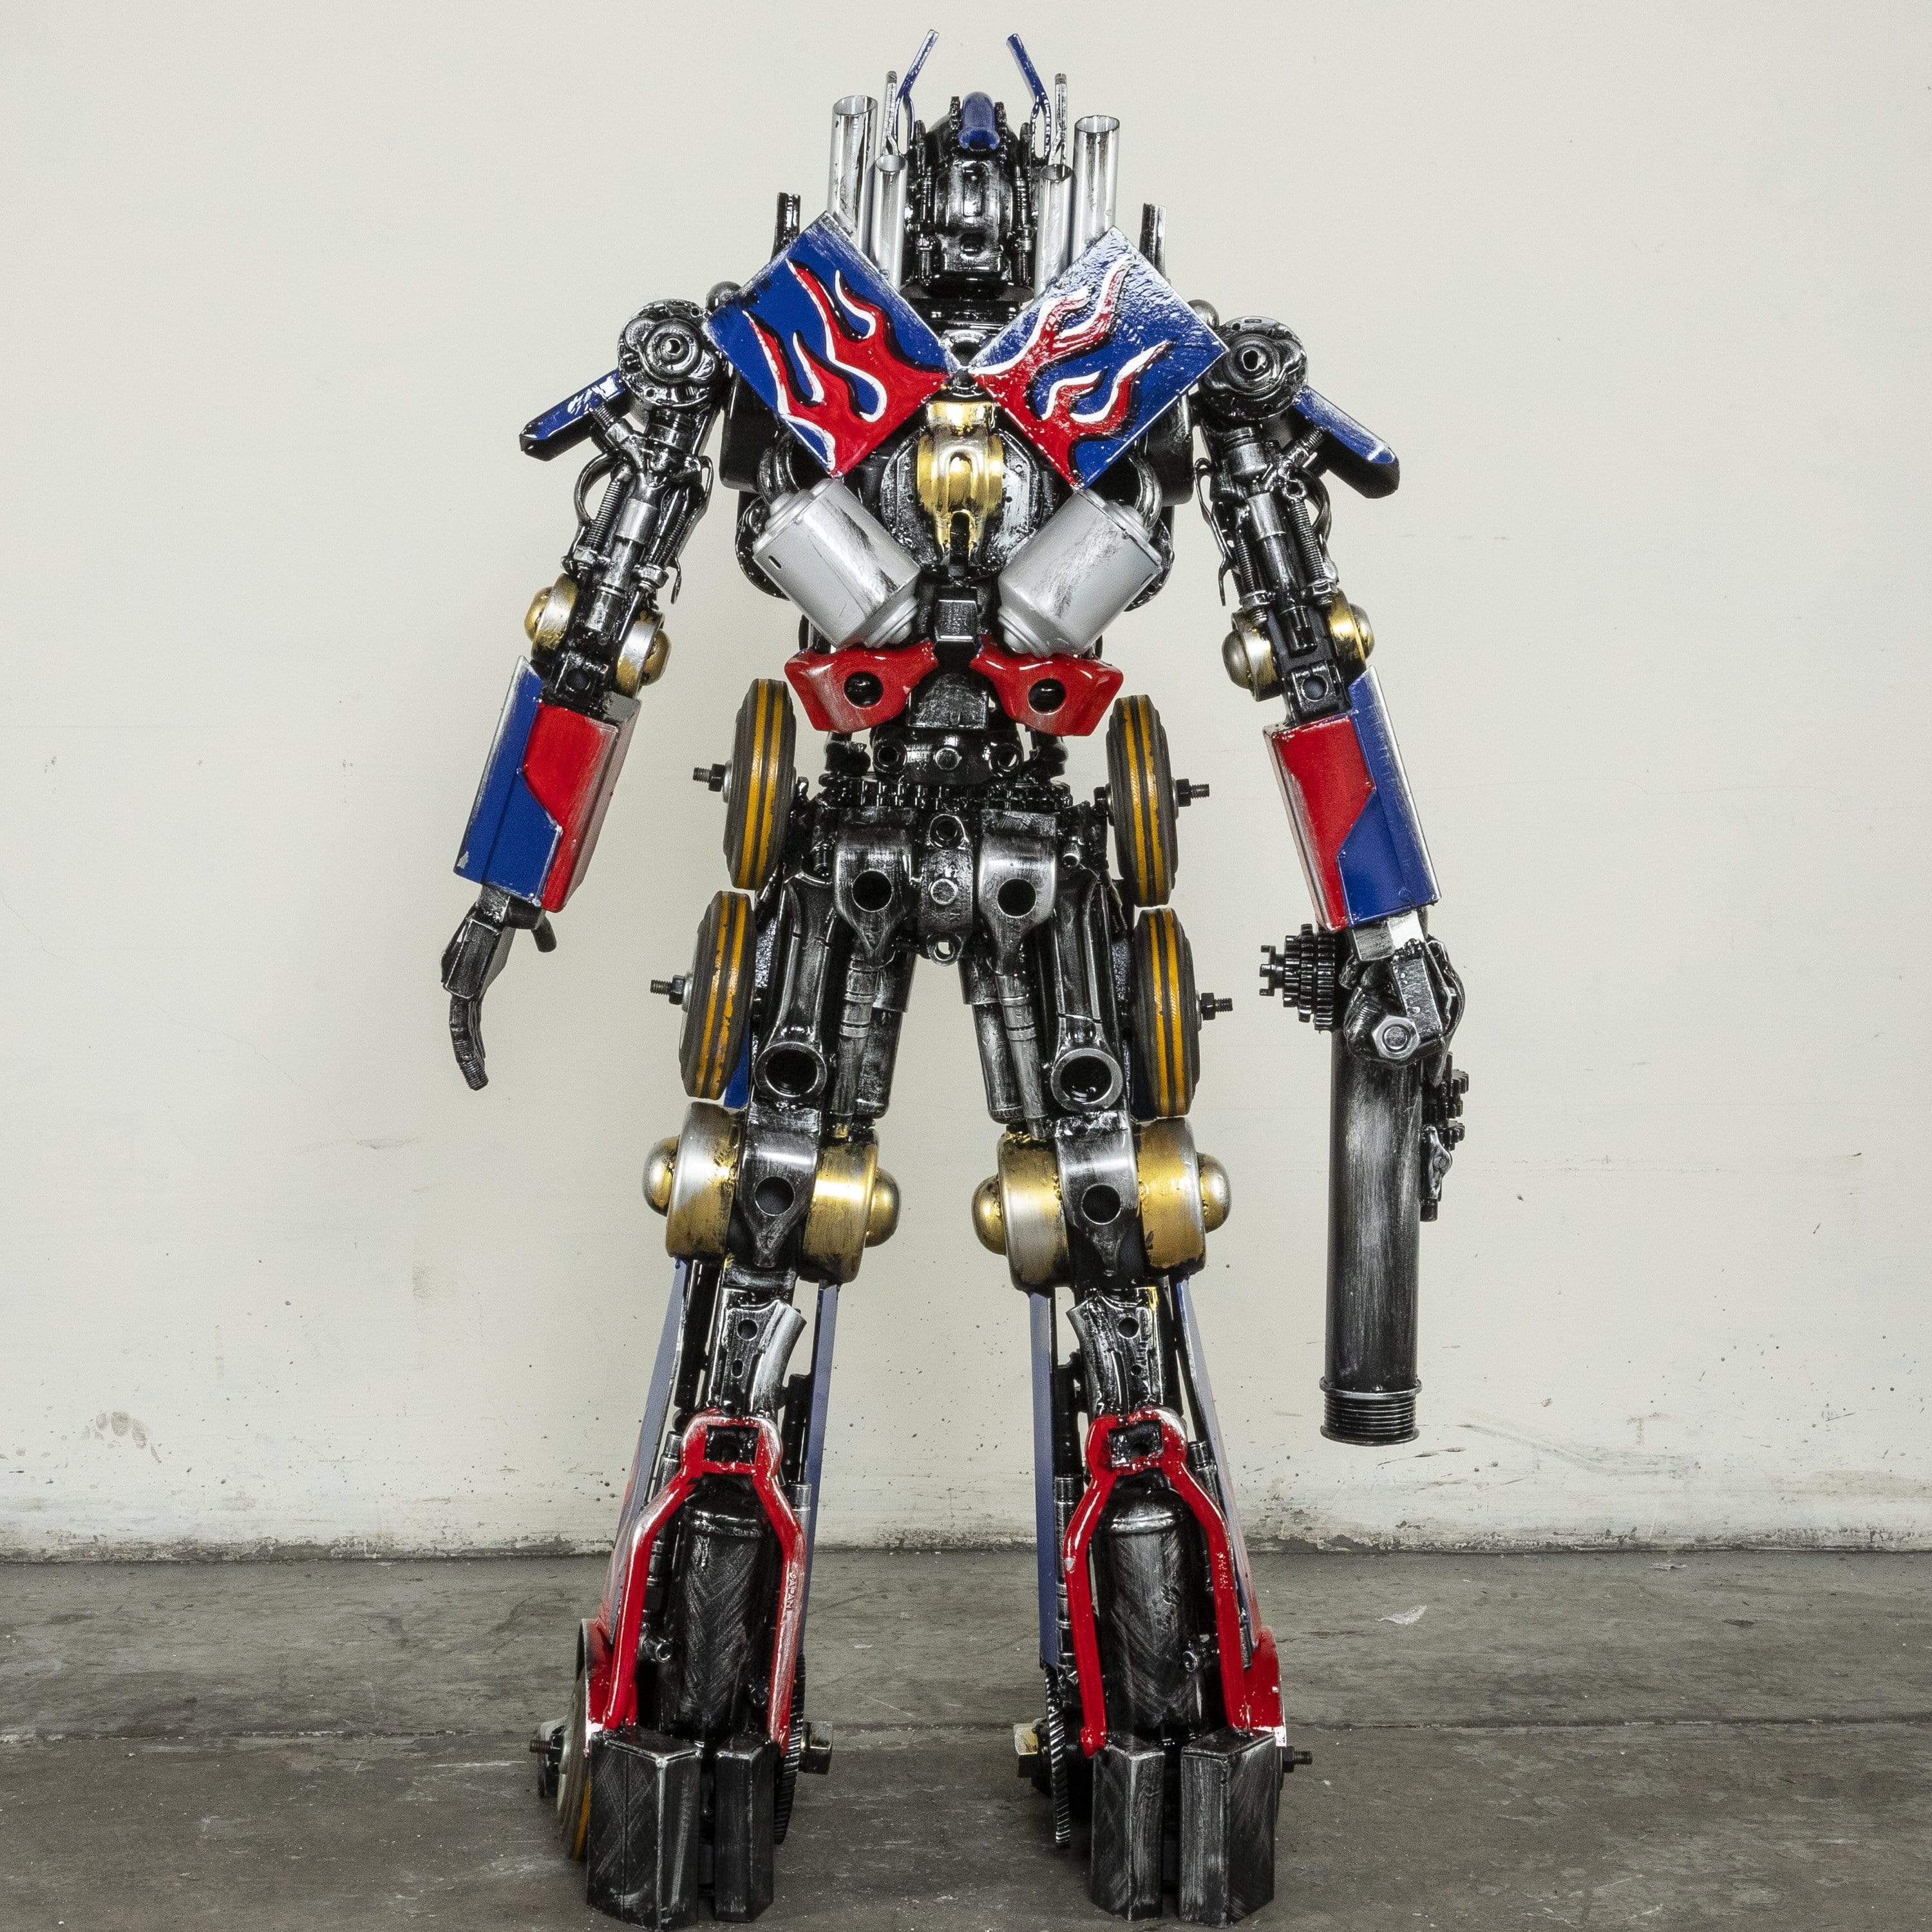 Kalifano Recycled Metal Art 44" Optimus Prime Inspired Recycled Metal Art Sculpture RMS-OP110-P